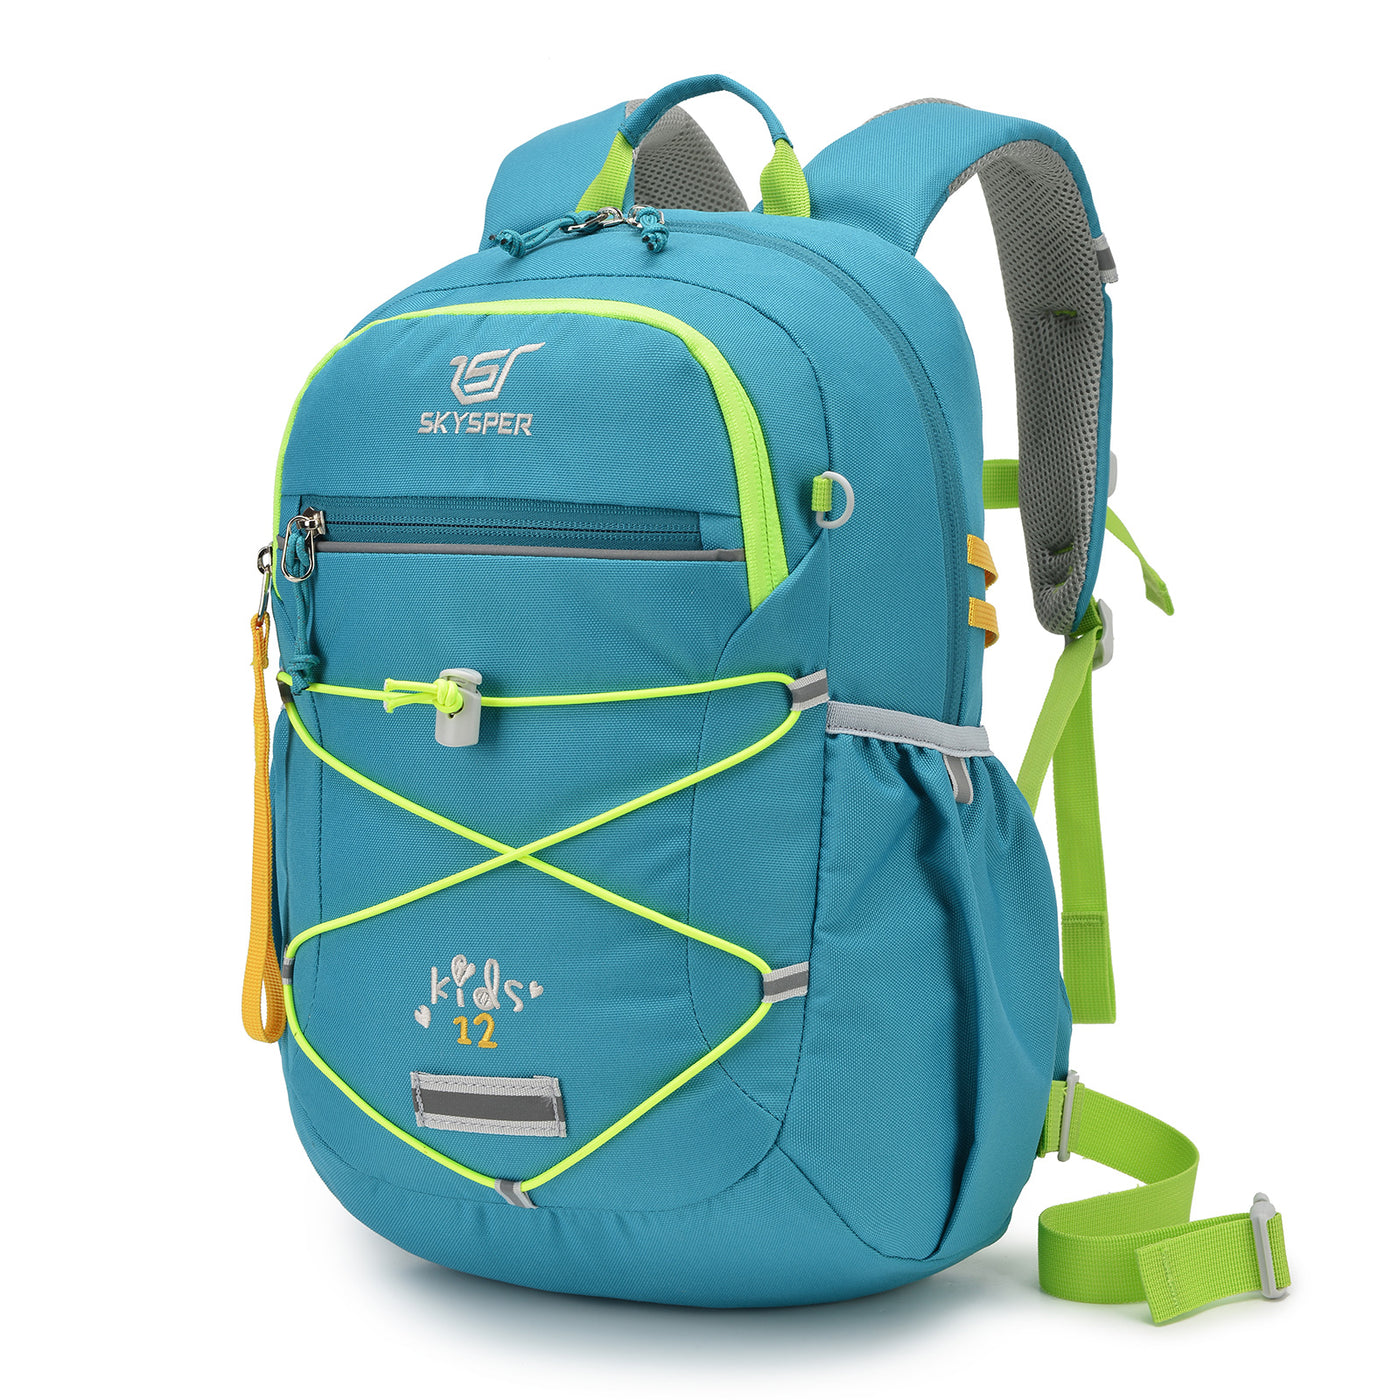 KIDS12 - SKYSPER 16-inch Toddler Kids Backpack for 5 - 9 years old